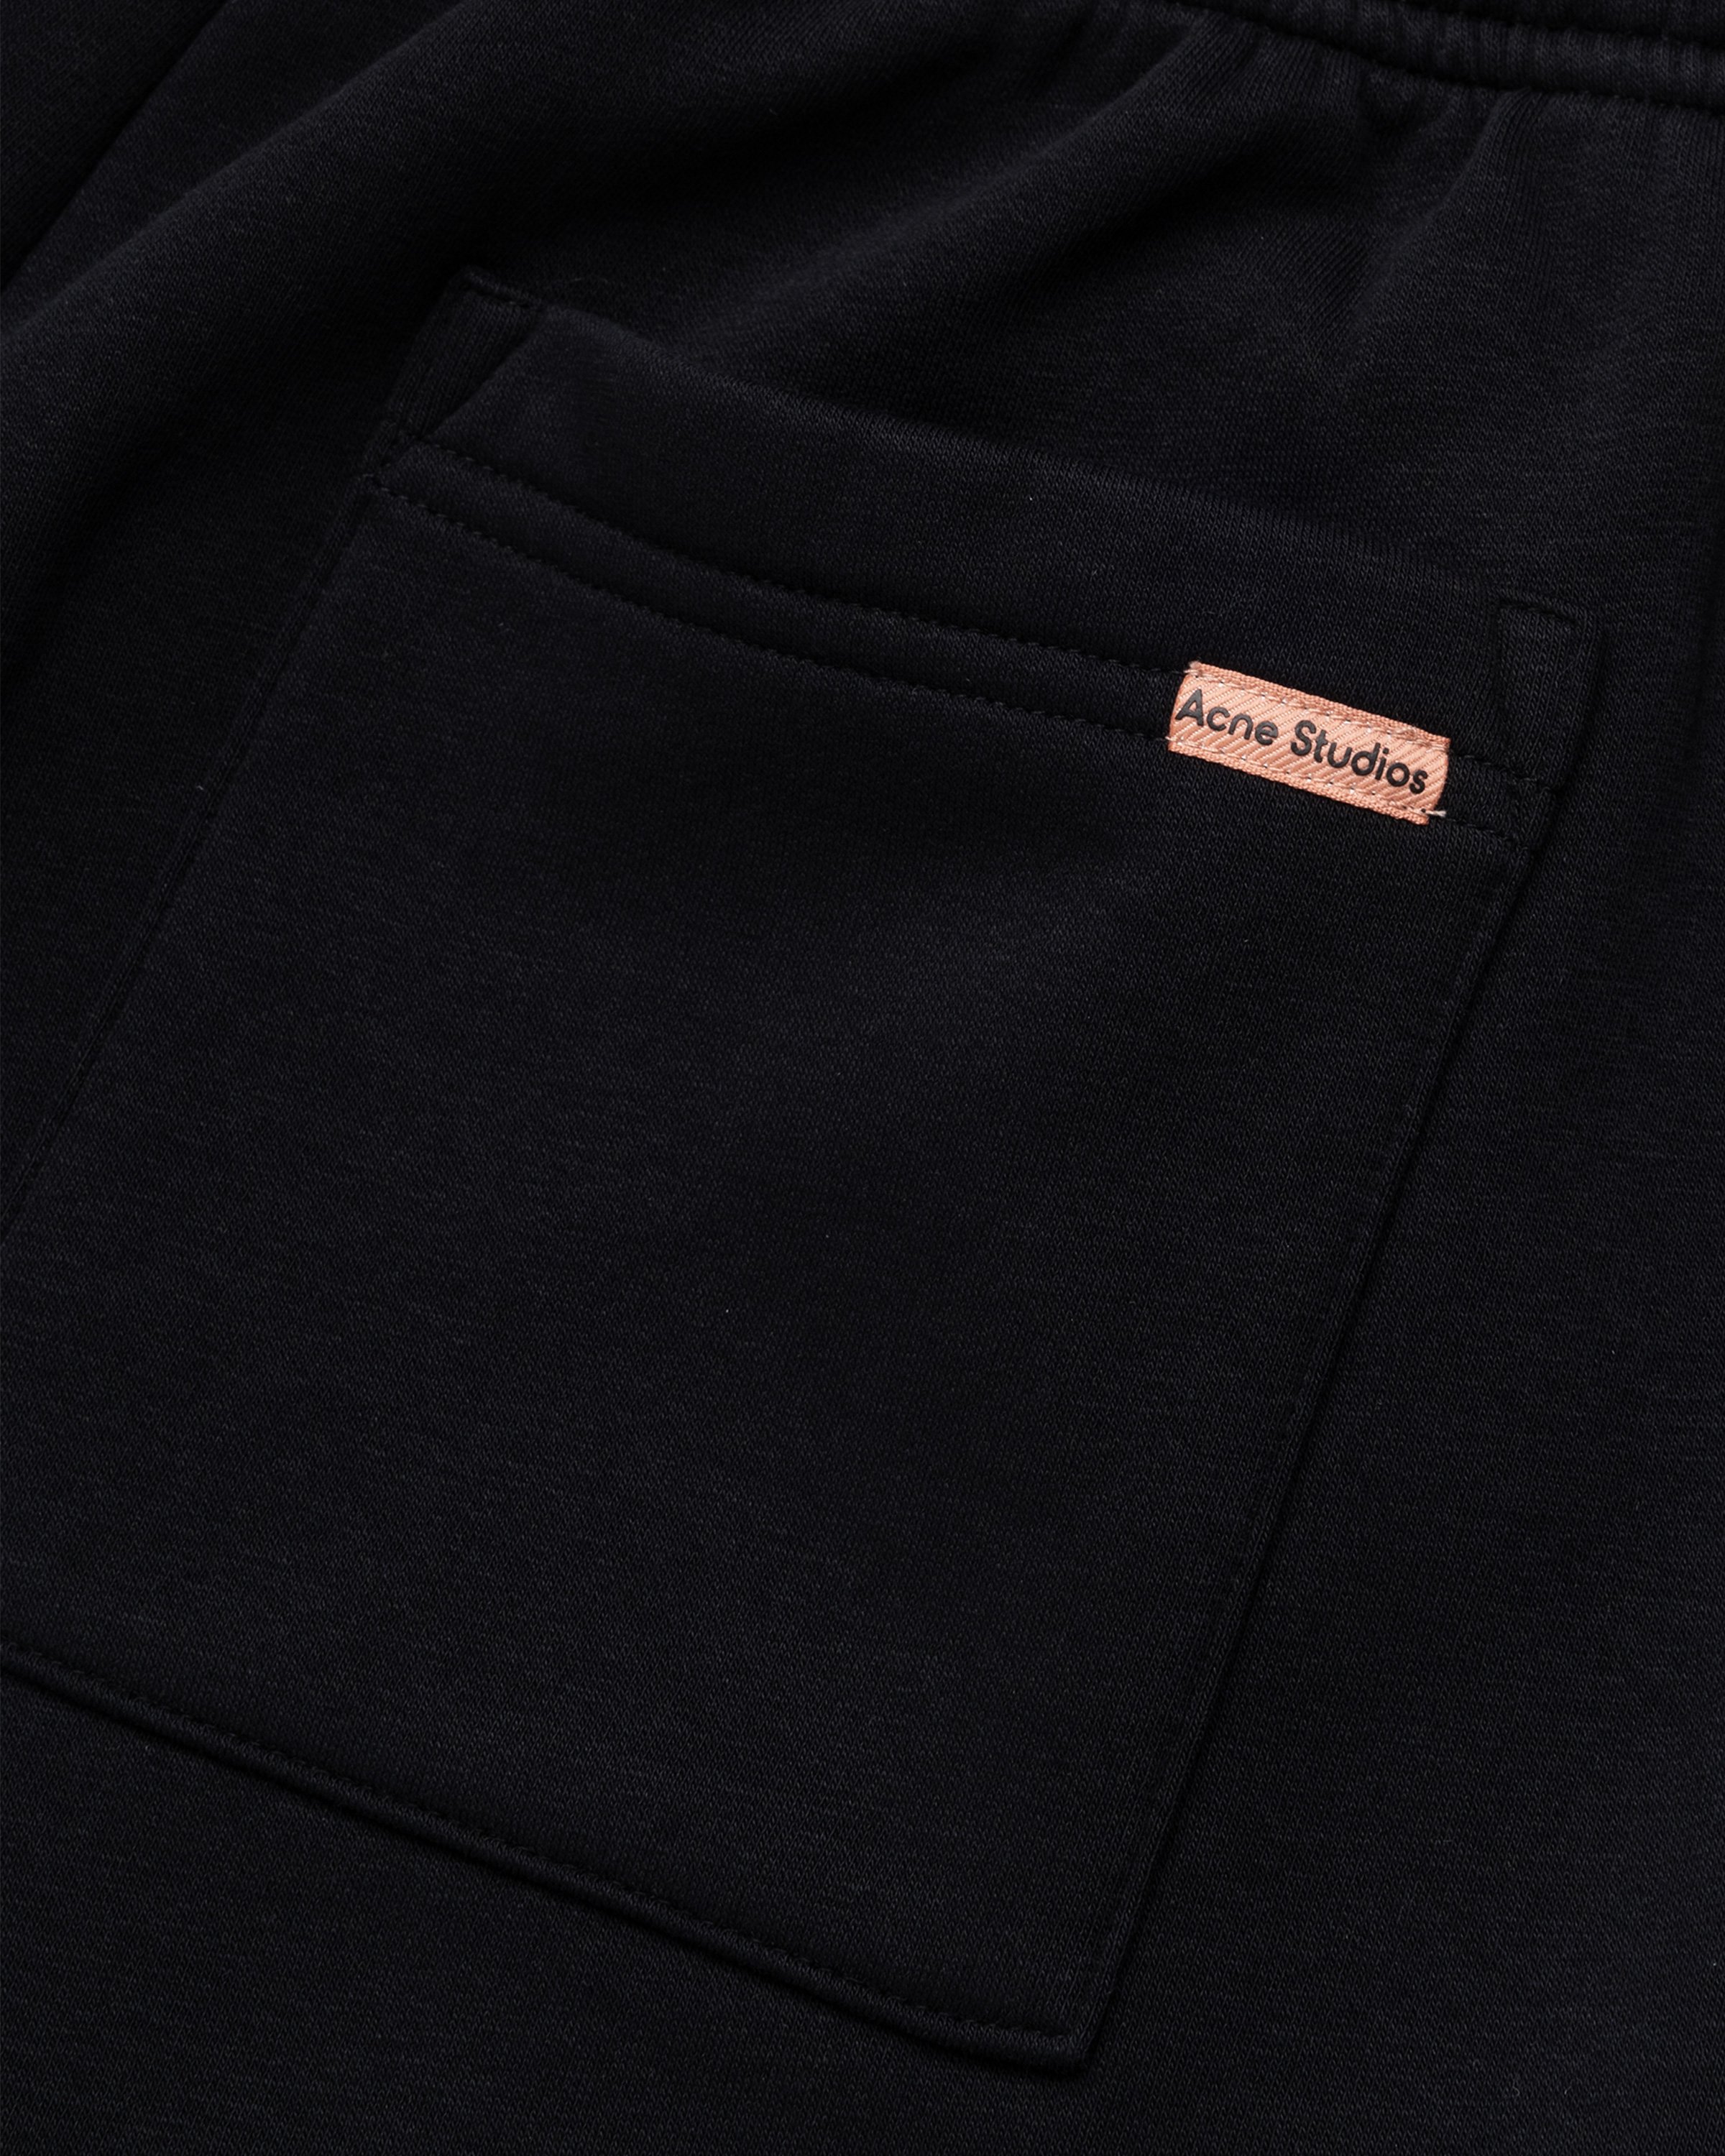 Acne Studios - Cotton Sweatpants Black - Clothing - Black - Image 7